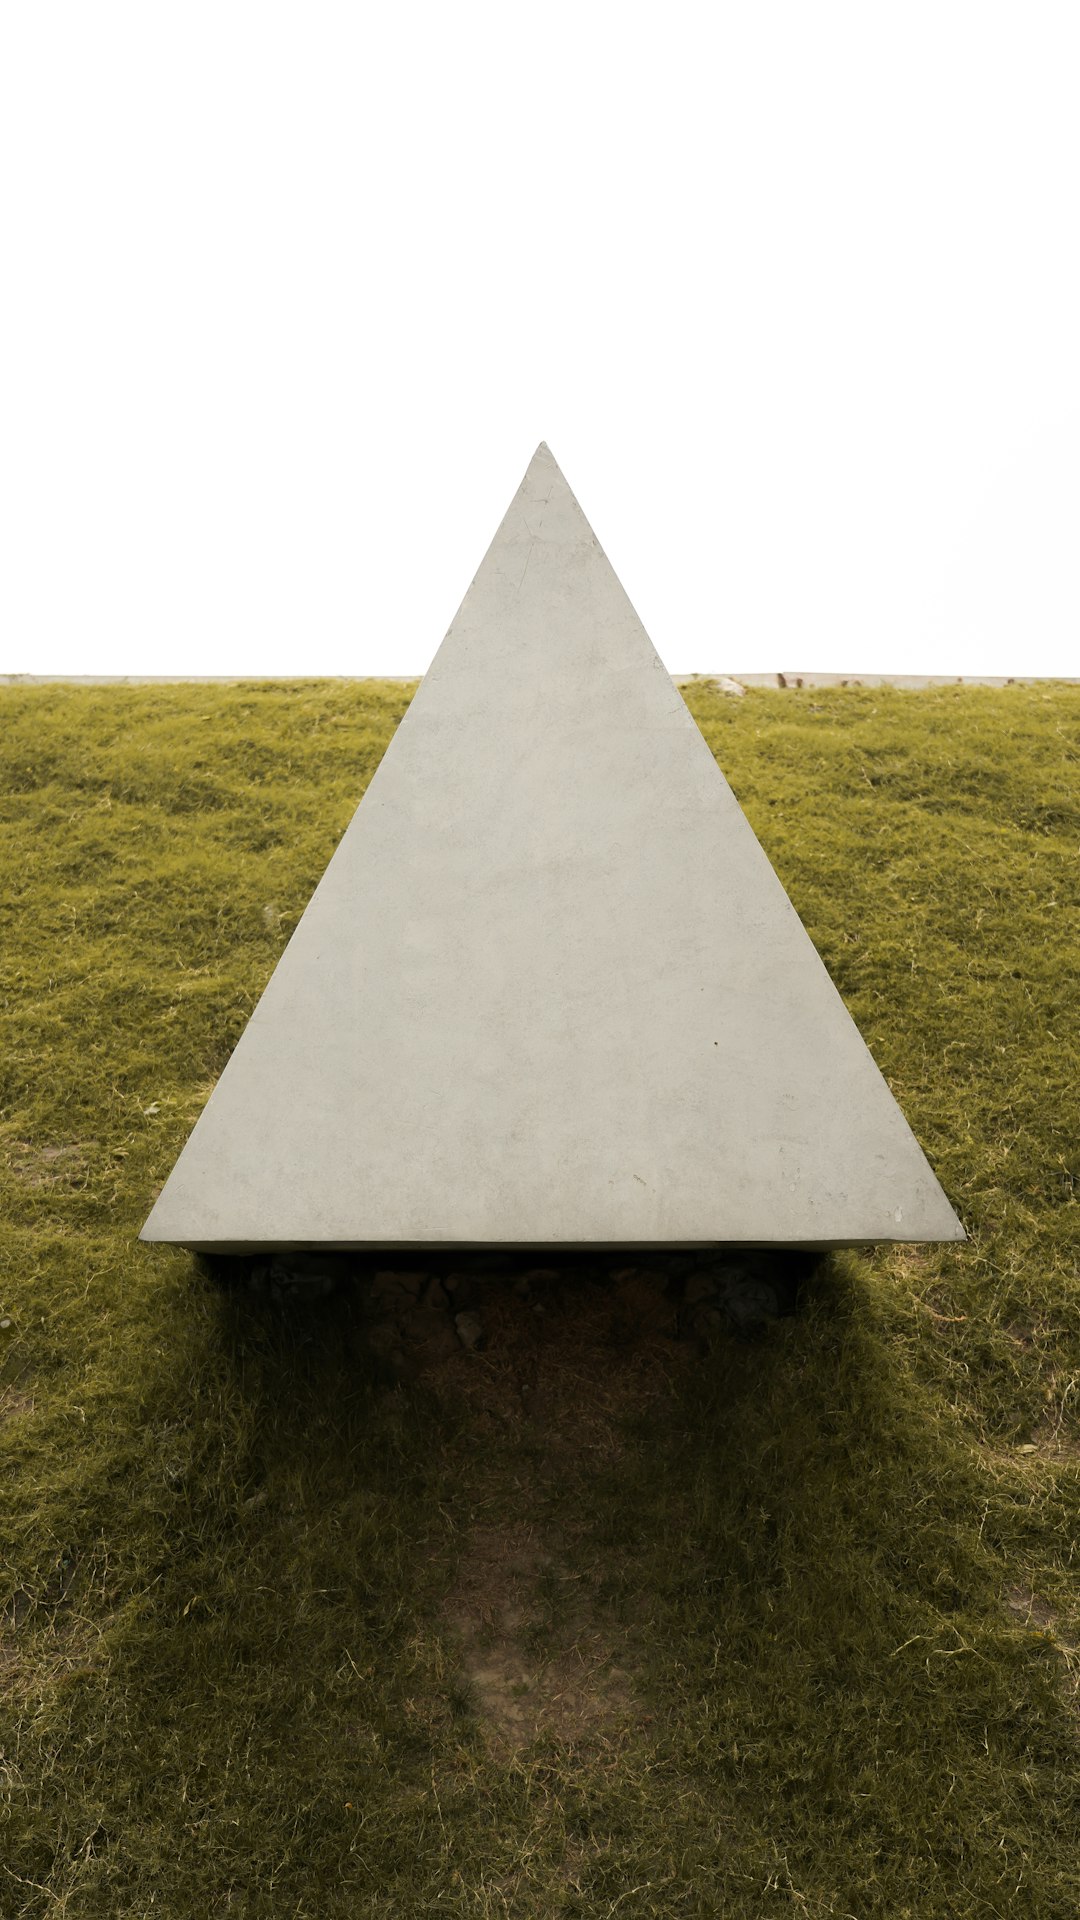 gray concrete pyramid on green grass field